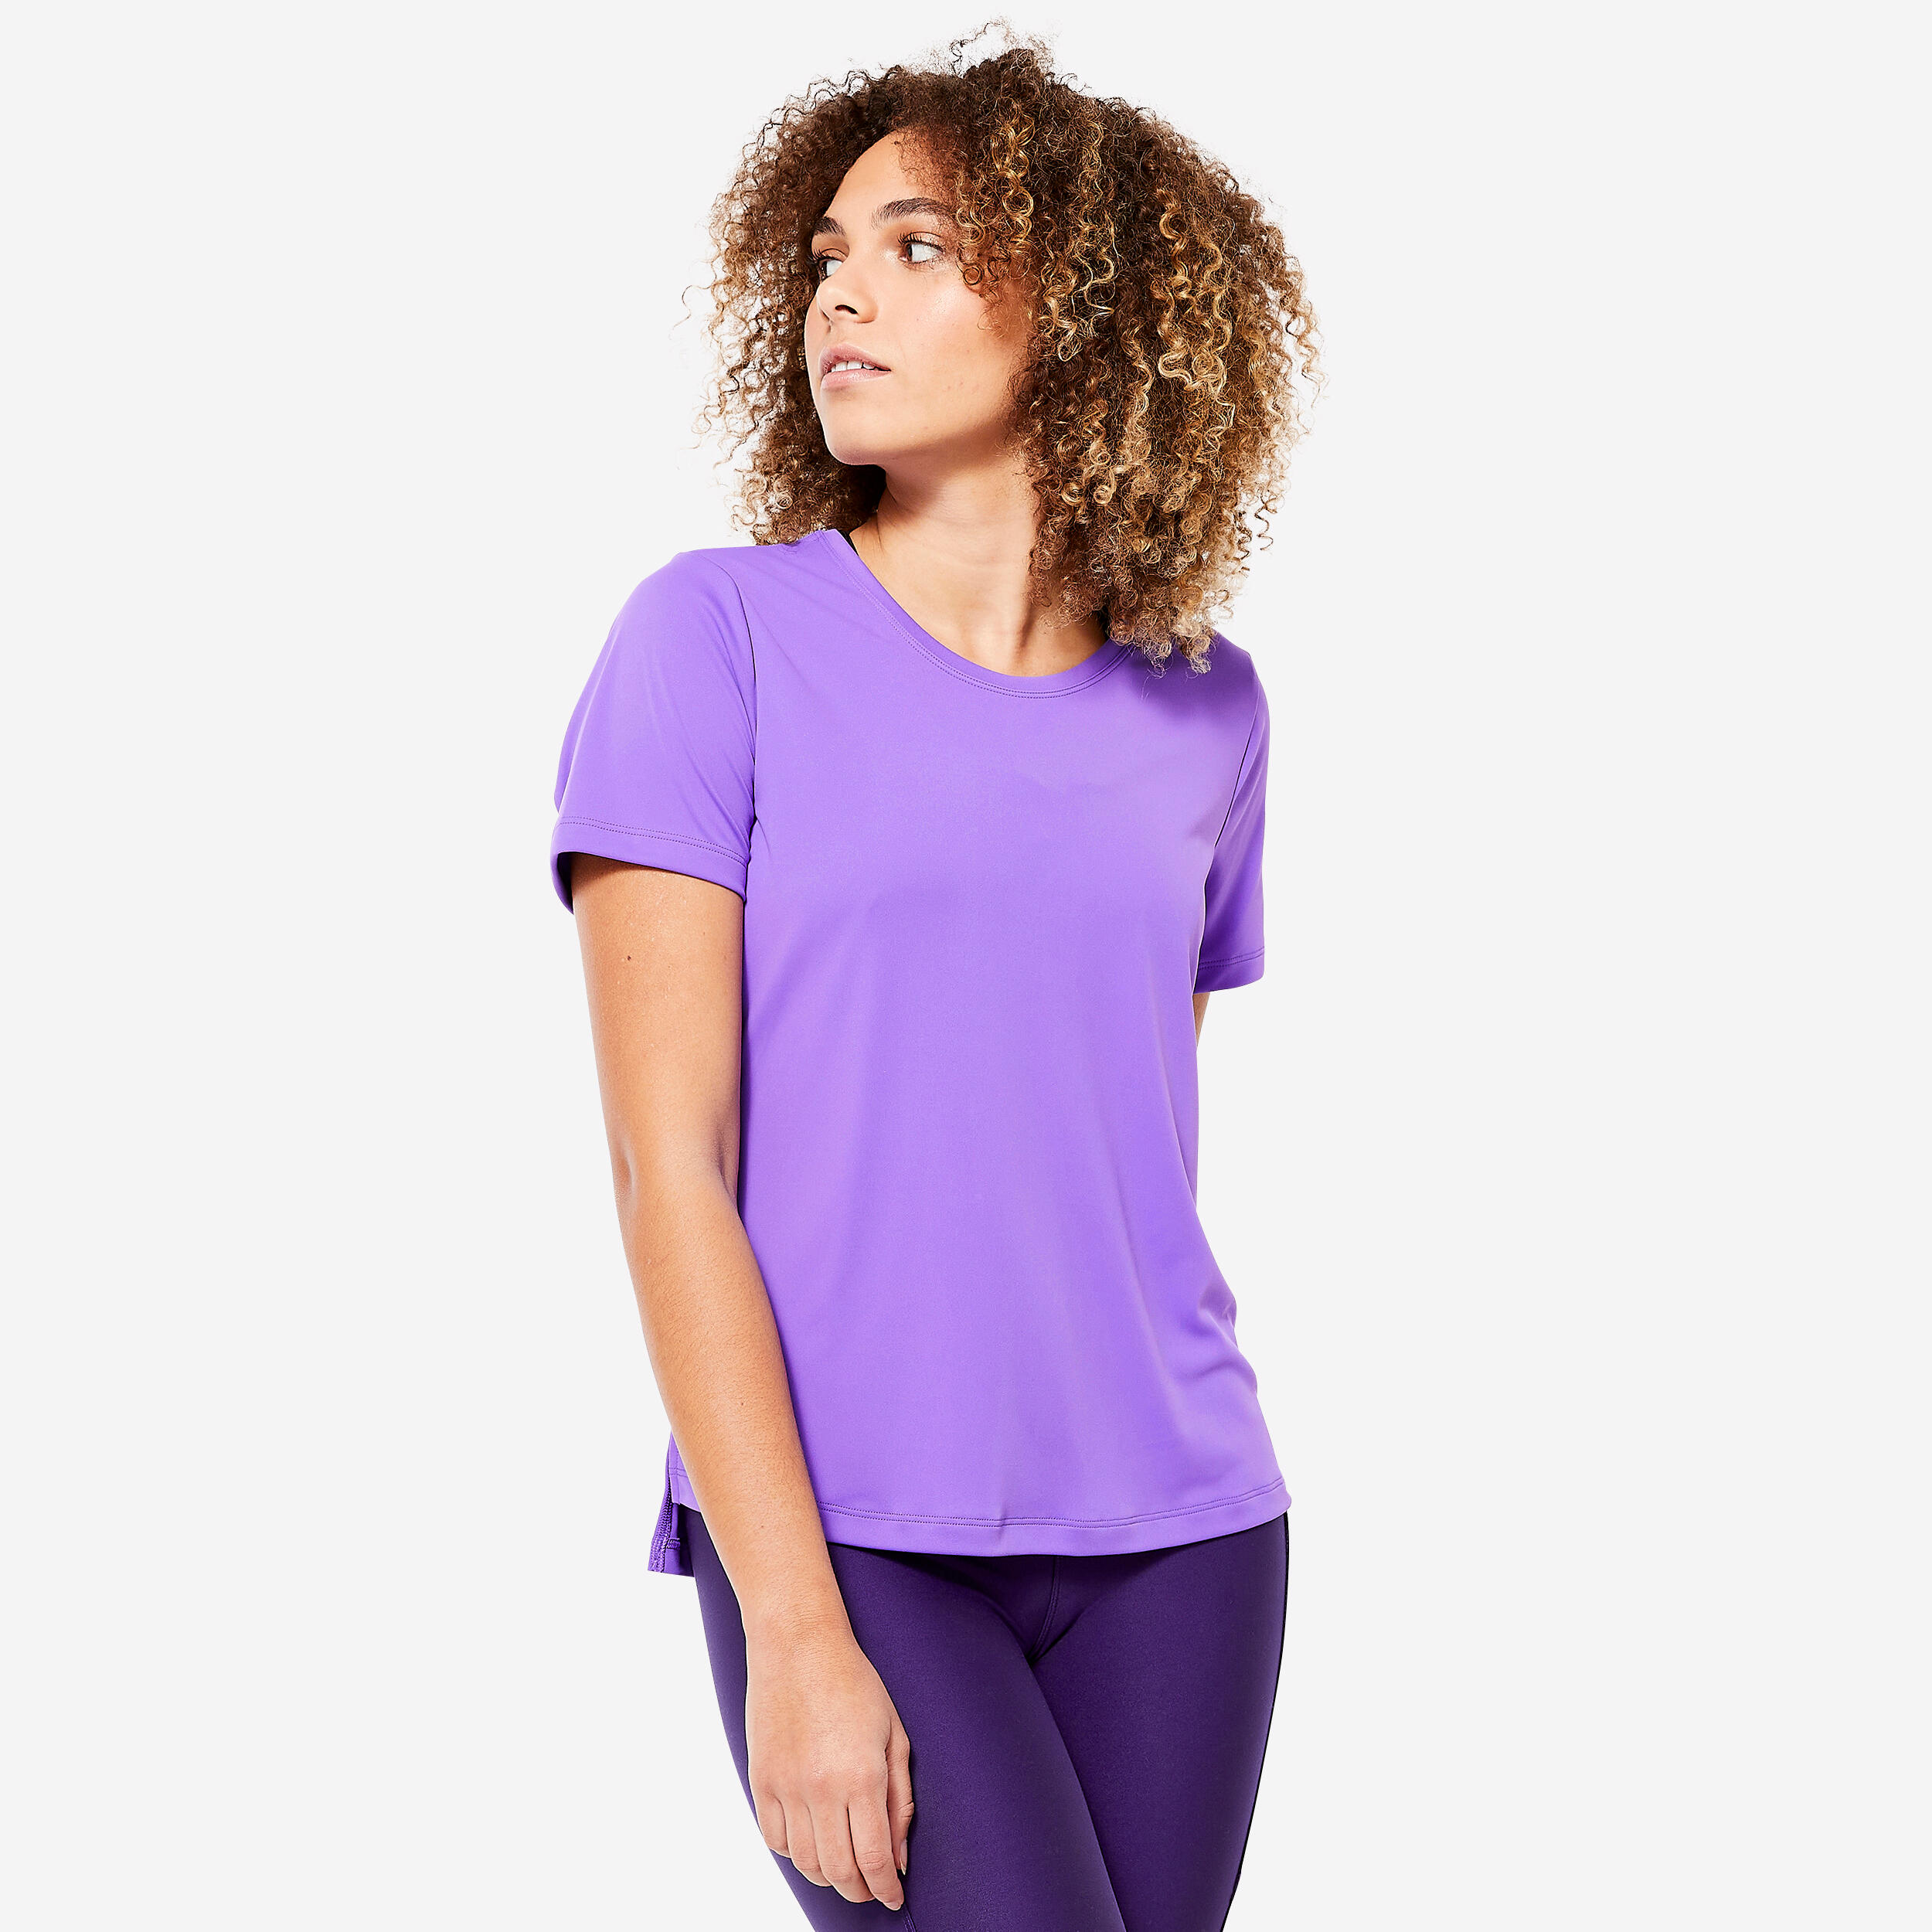 DOMYOS Women's Short-Sleeved Cardio Fitness T-Shirt - Purple